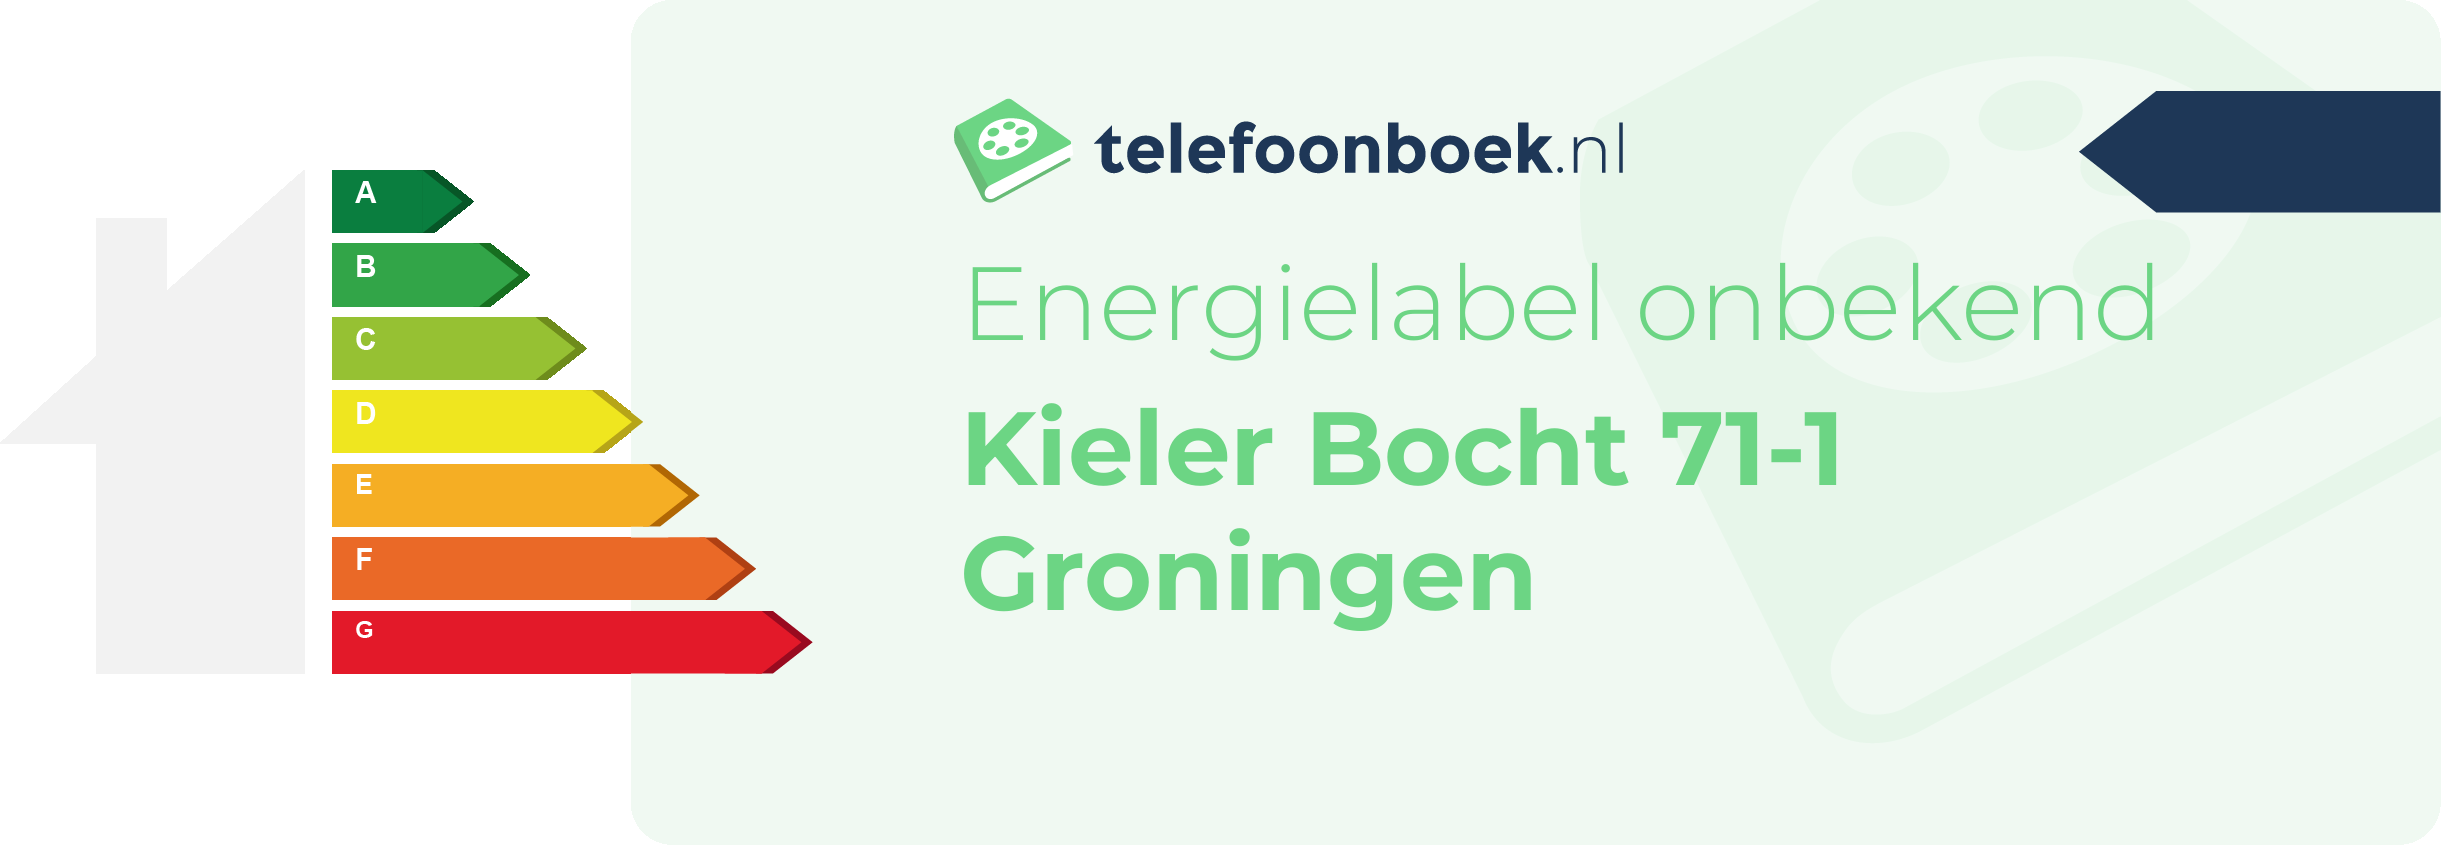 Energielabel Kieler Bocht 71-1 Groningen